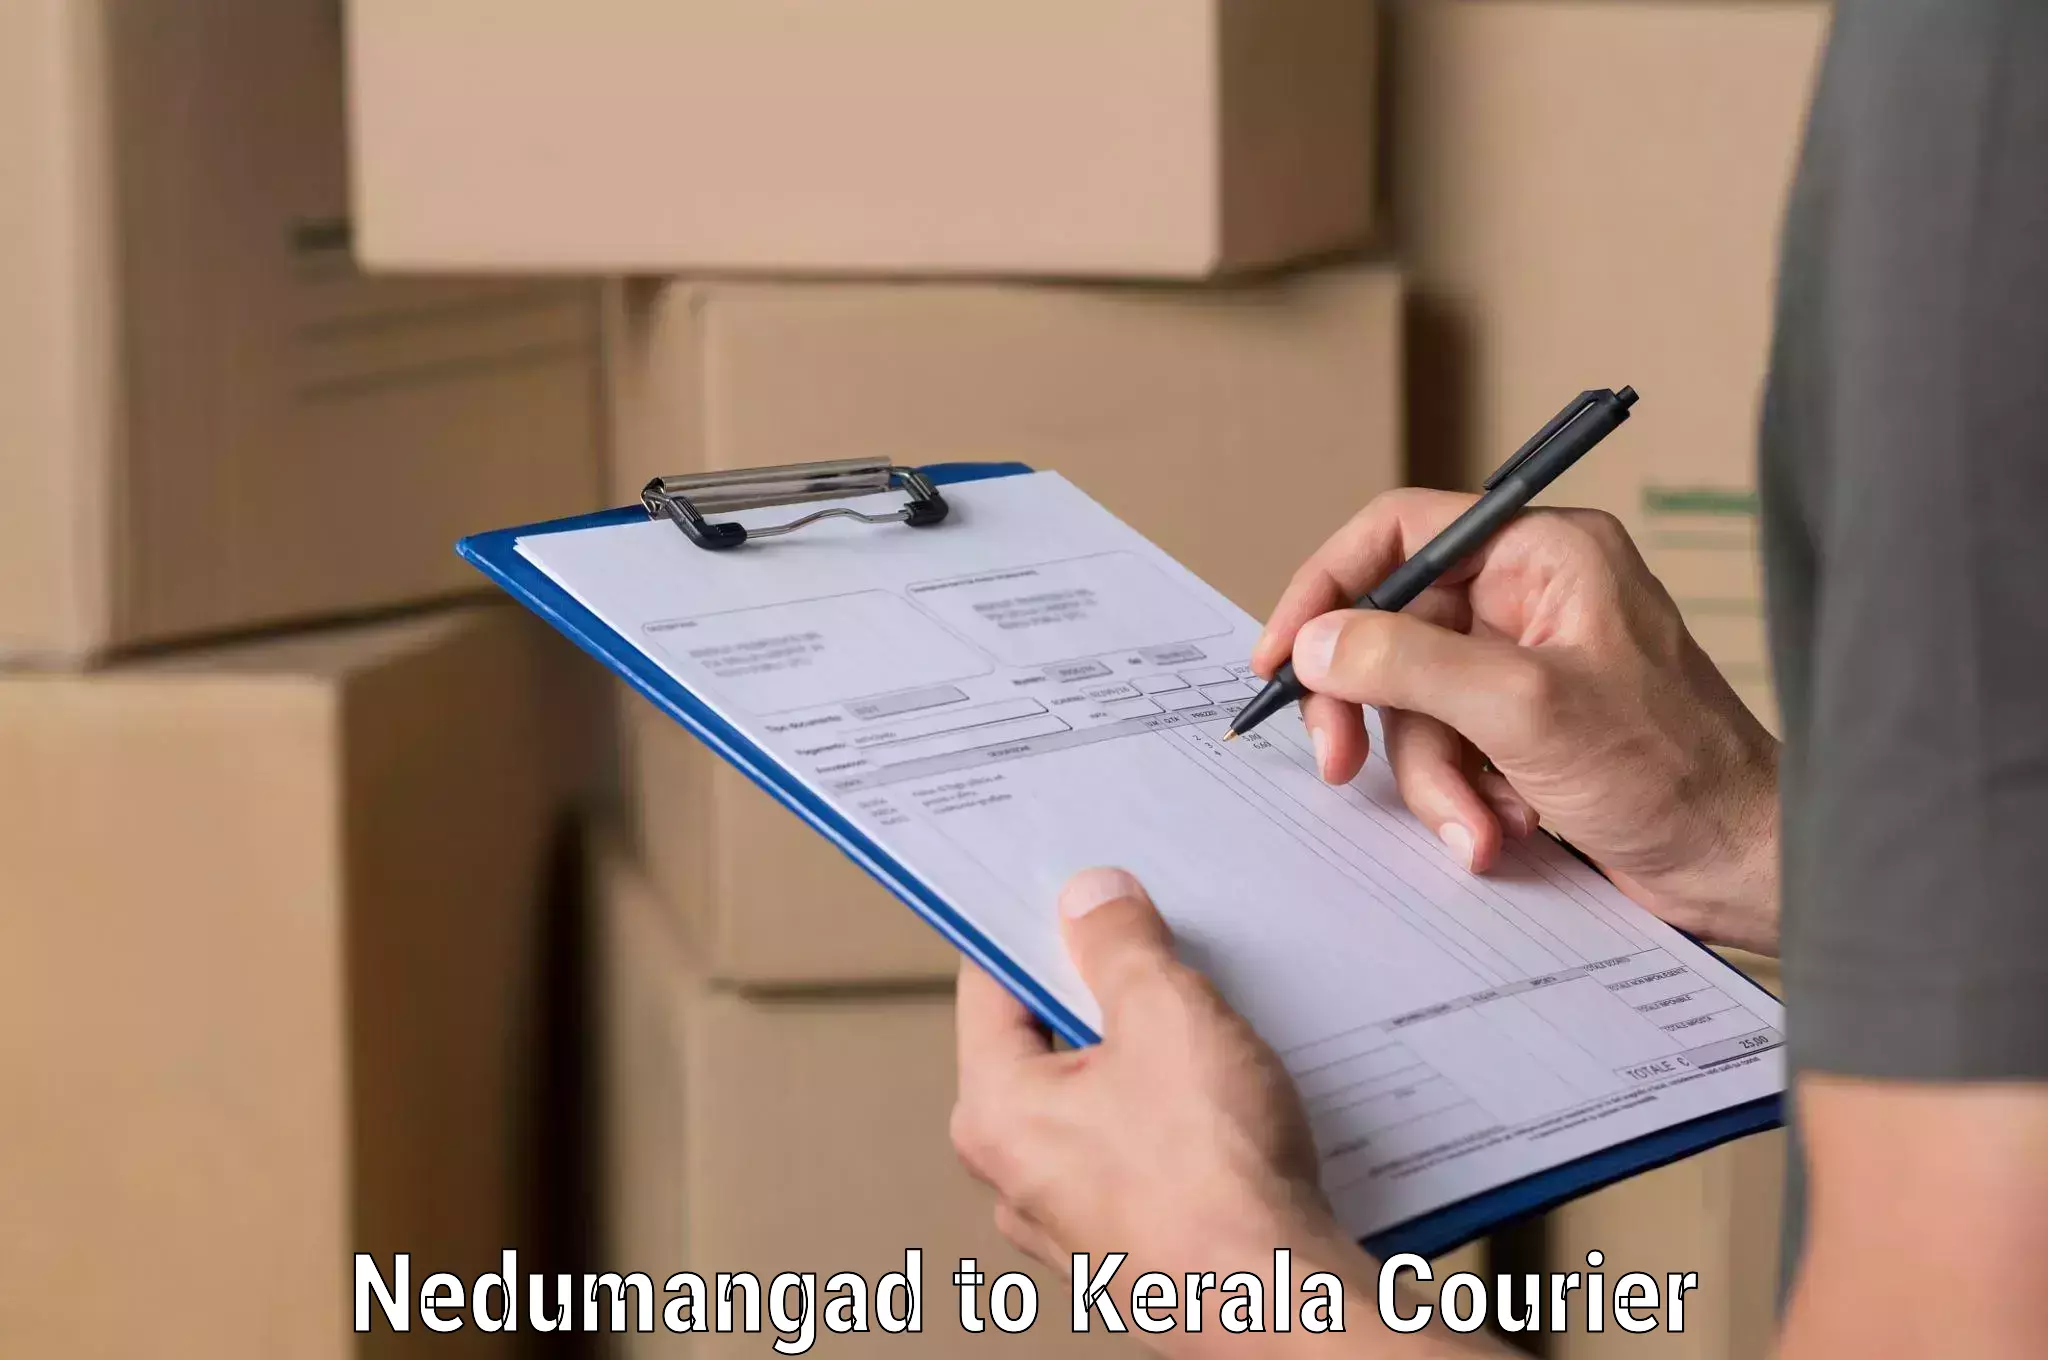 Flexible delivery scheduling in Nedumangad to Koothattukulam